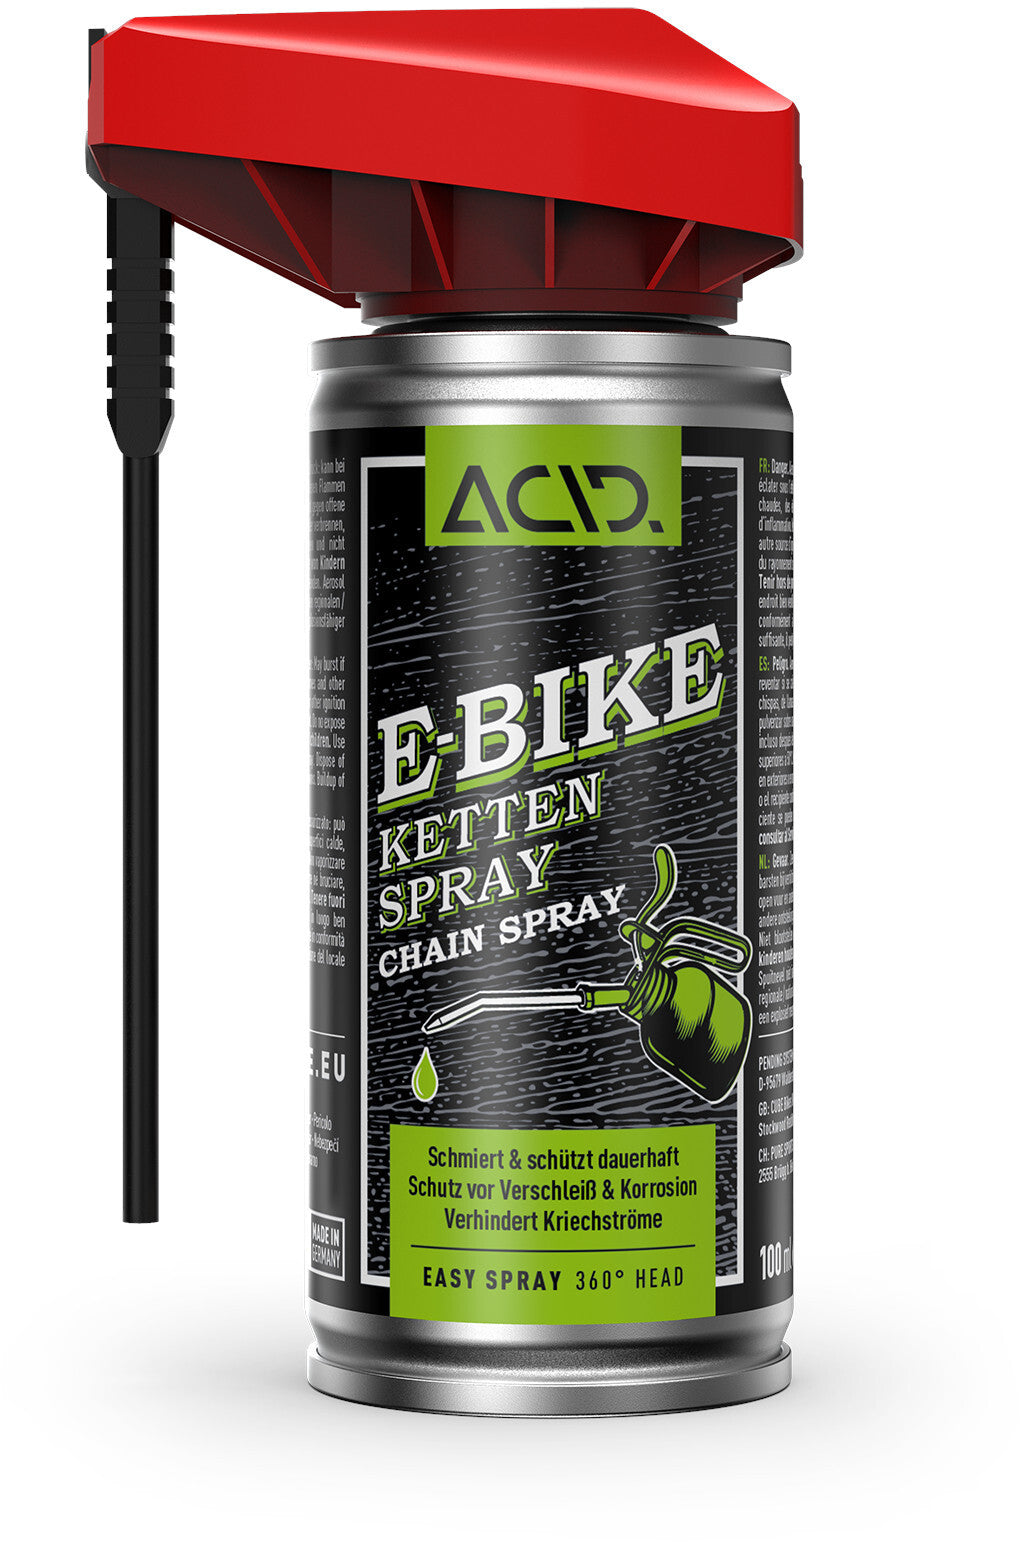 ACID E-Bike Kettenspray